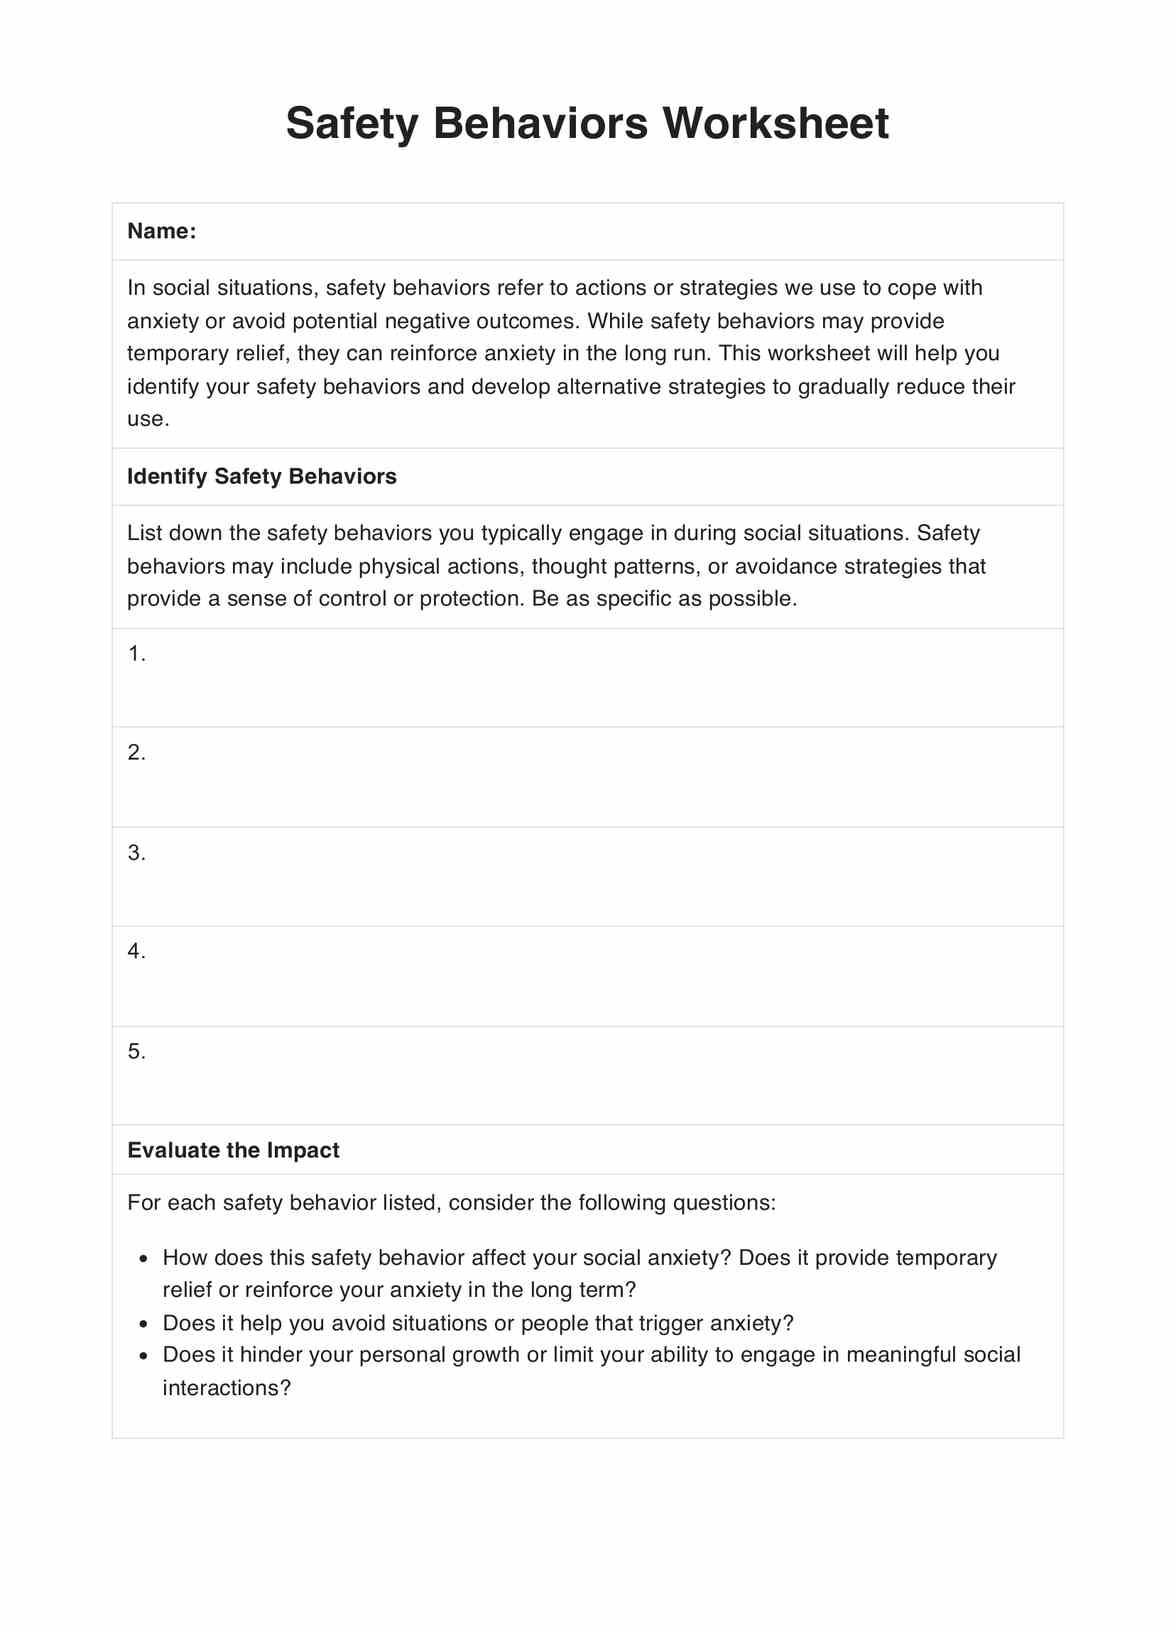 Safety Behaviors Worksheet PDF Example